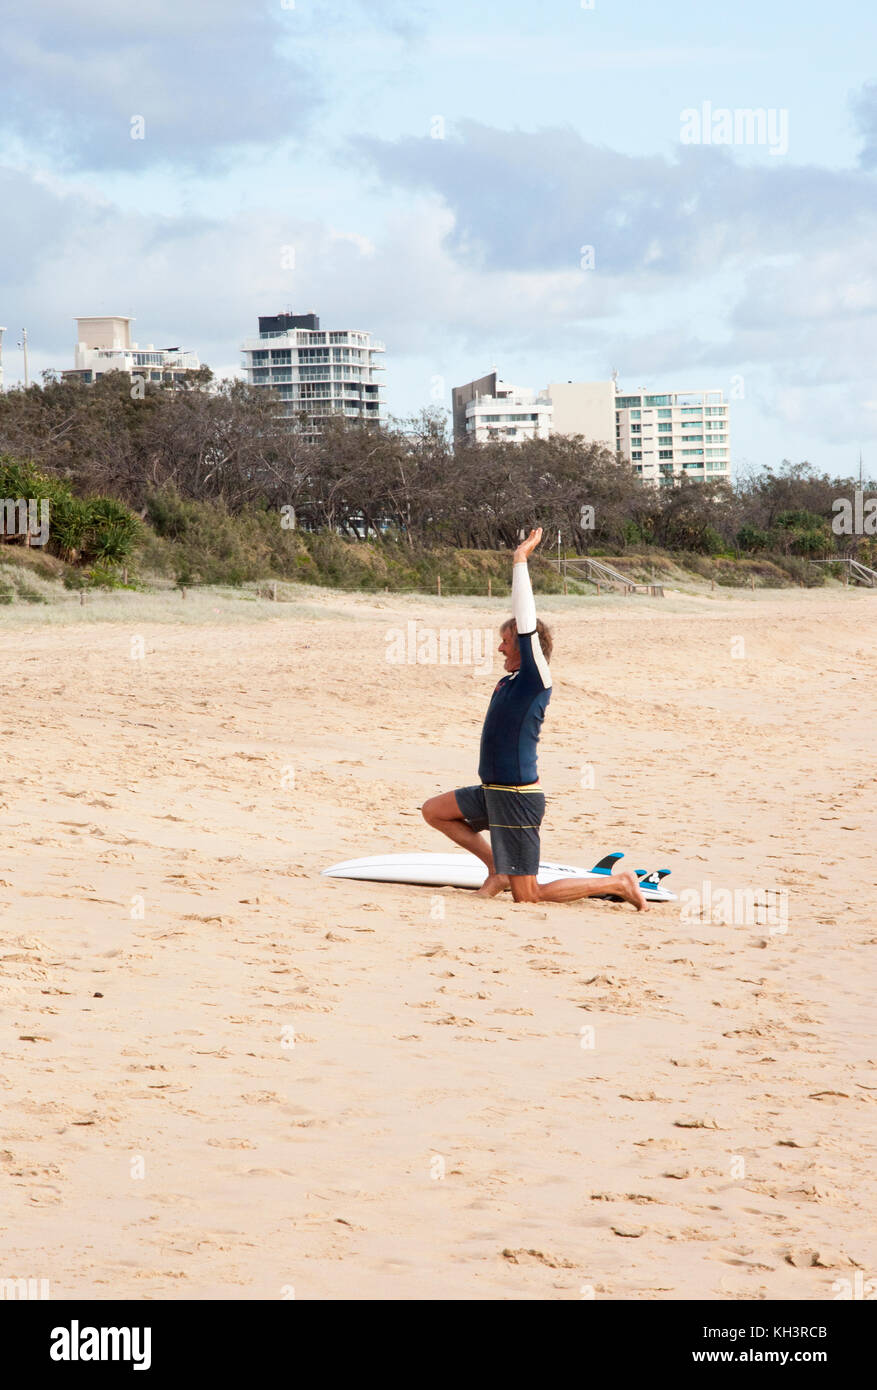 https://c8.alamy.com/comp/KH3RCB/man-performing-yoga-routines-on-the-beach-at-alexandra-headland-sunshine-KH3RCB.jpg